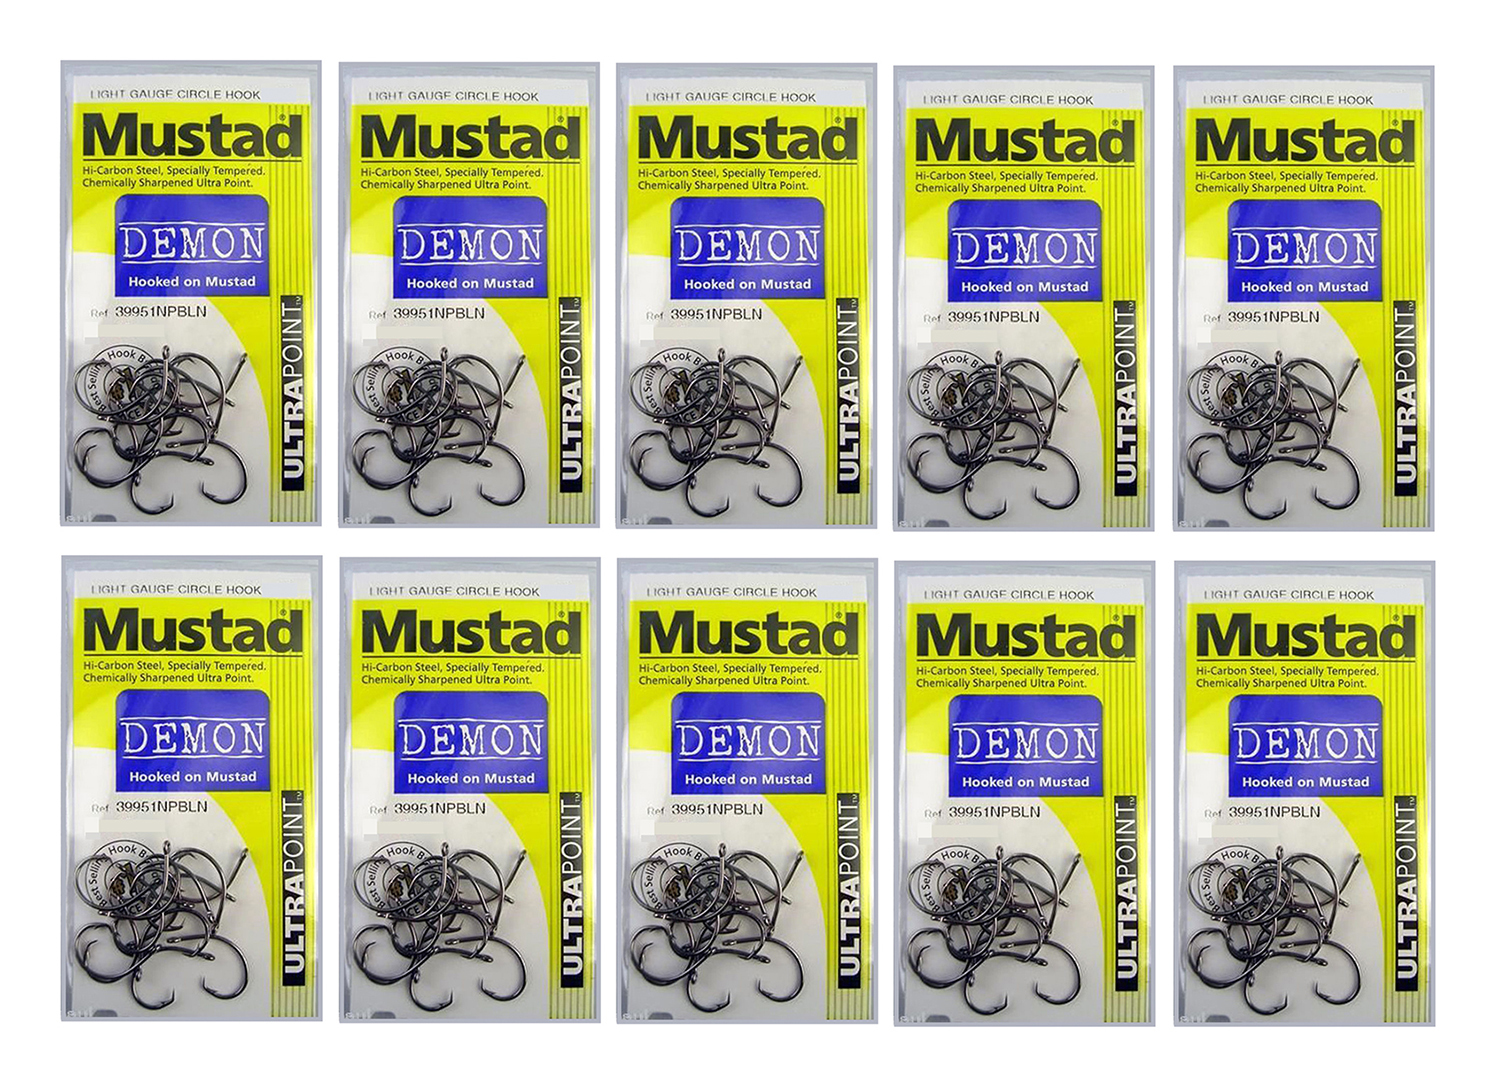 10 Packs of Mustad 39951NPBLN Demon Circle Light Chemically